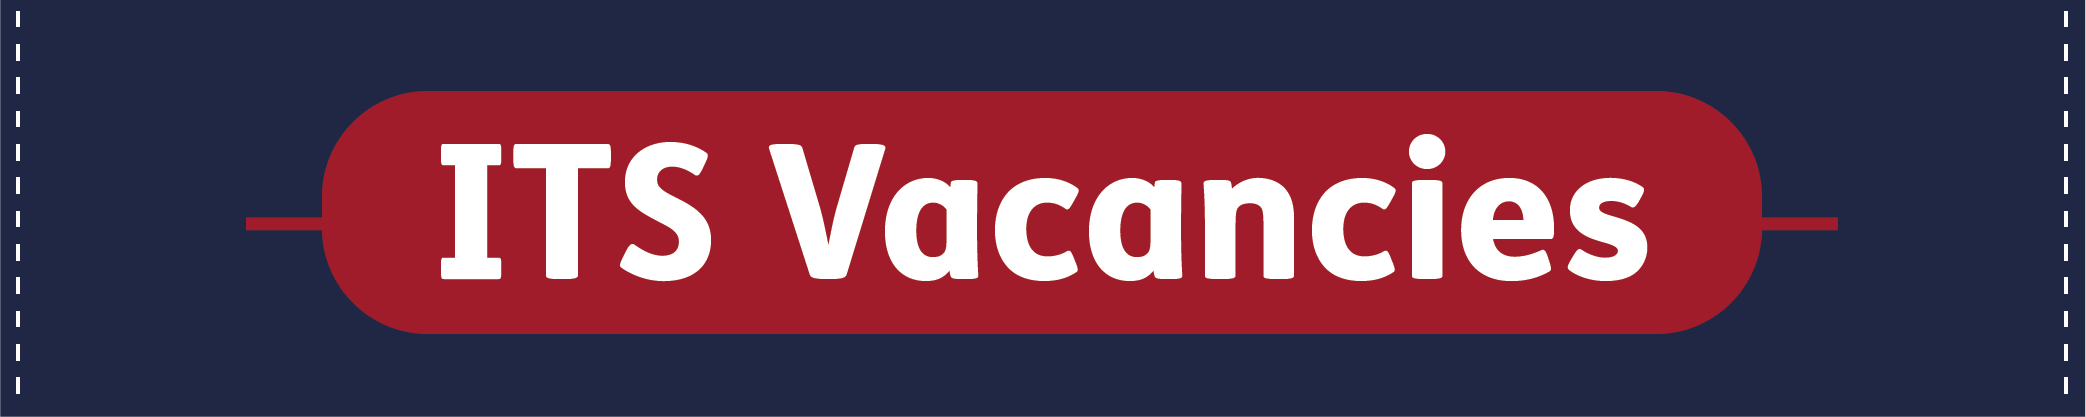 ITS vacancies button 